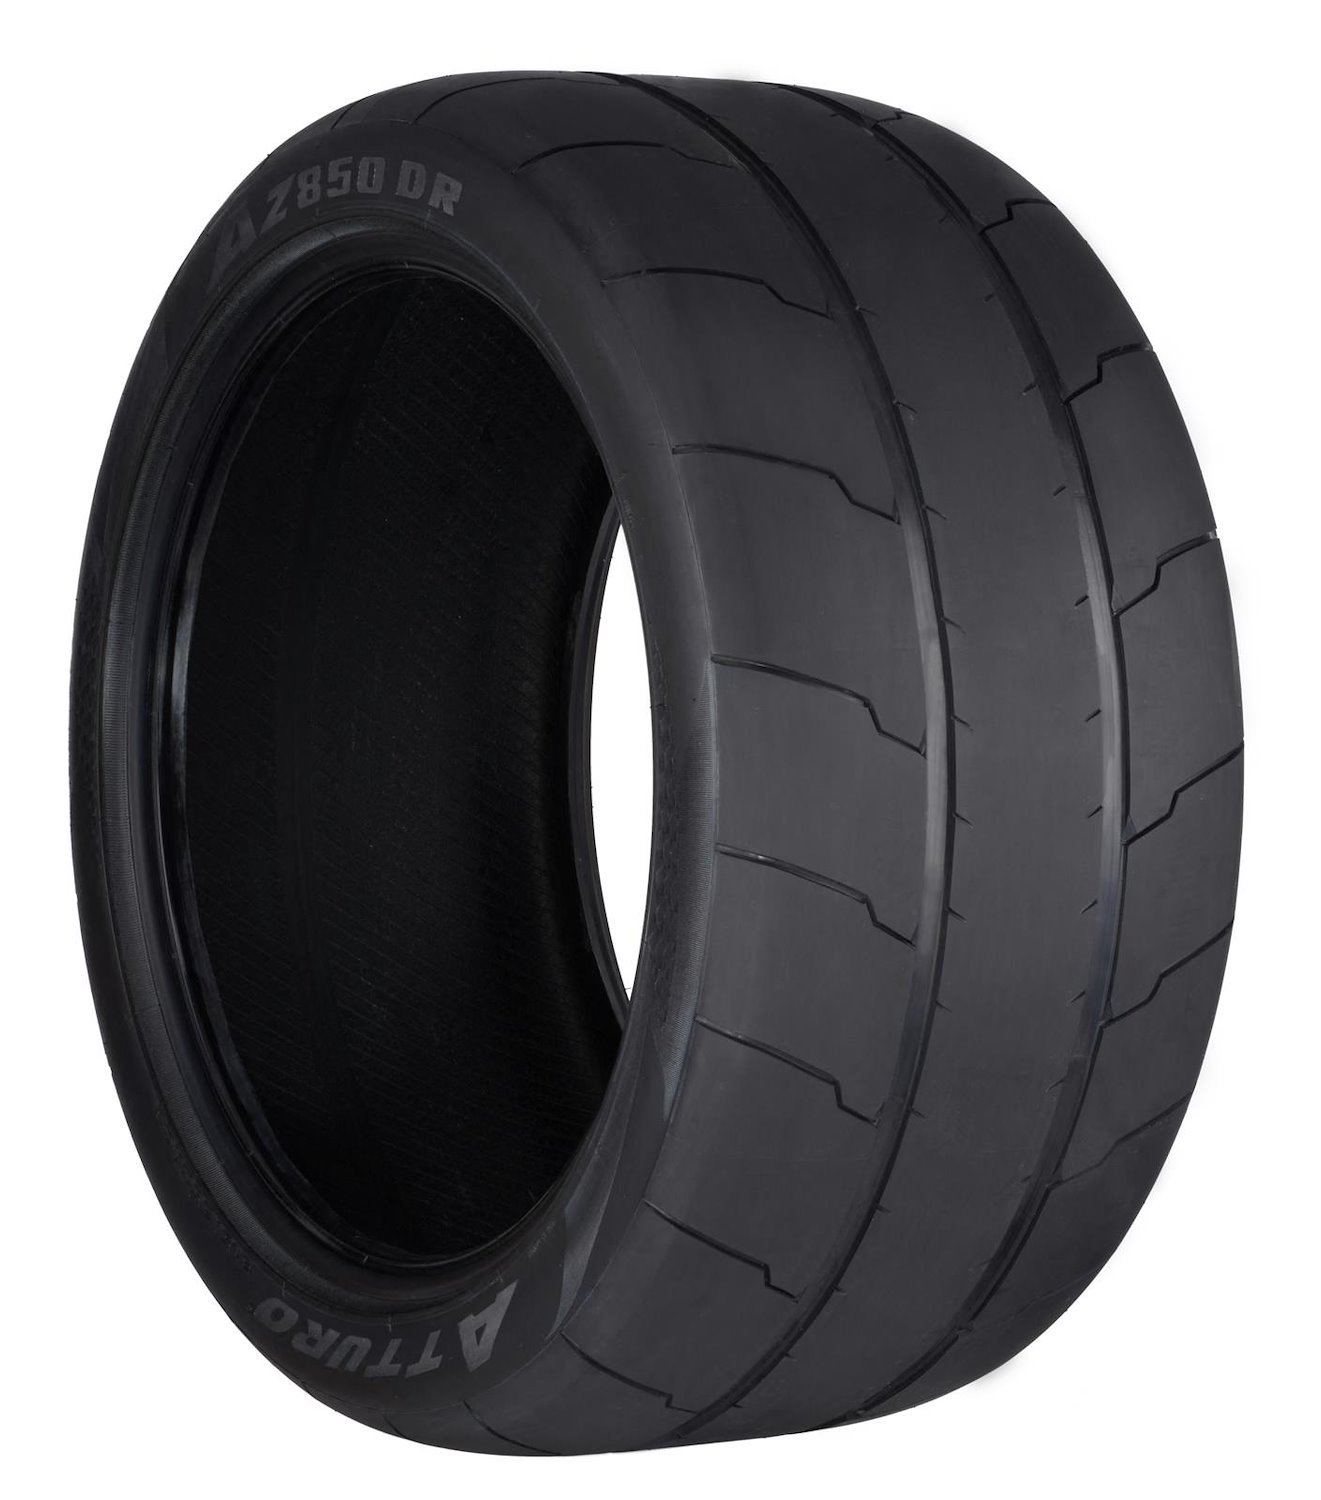 AZ 850 DR Drag Radial Tire, 285/35R20